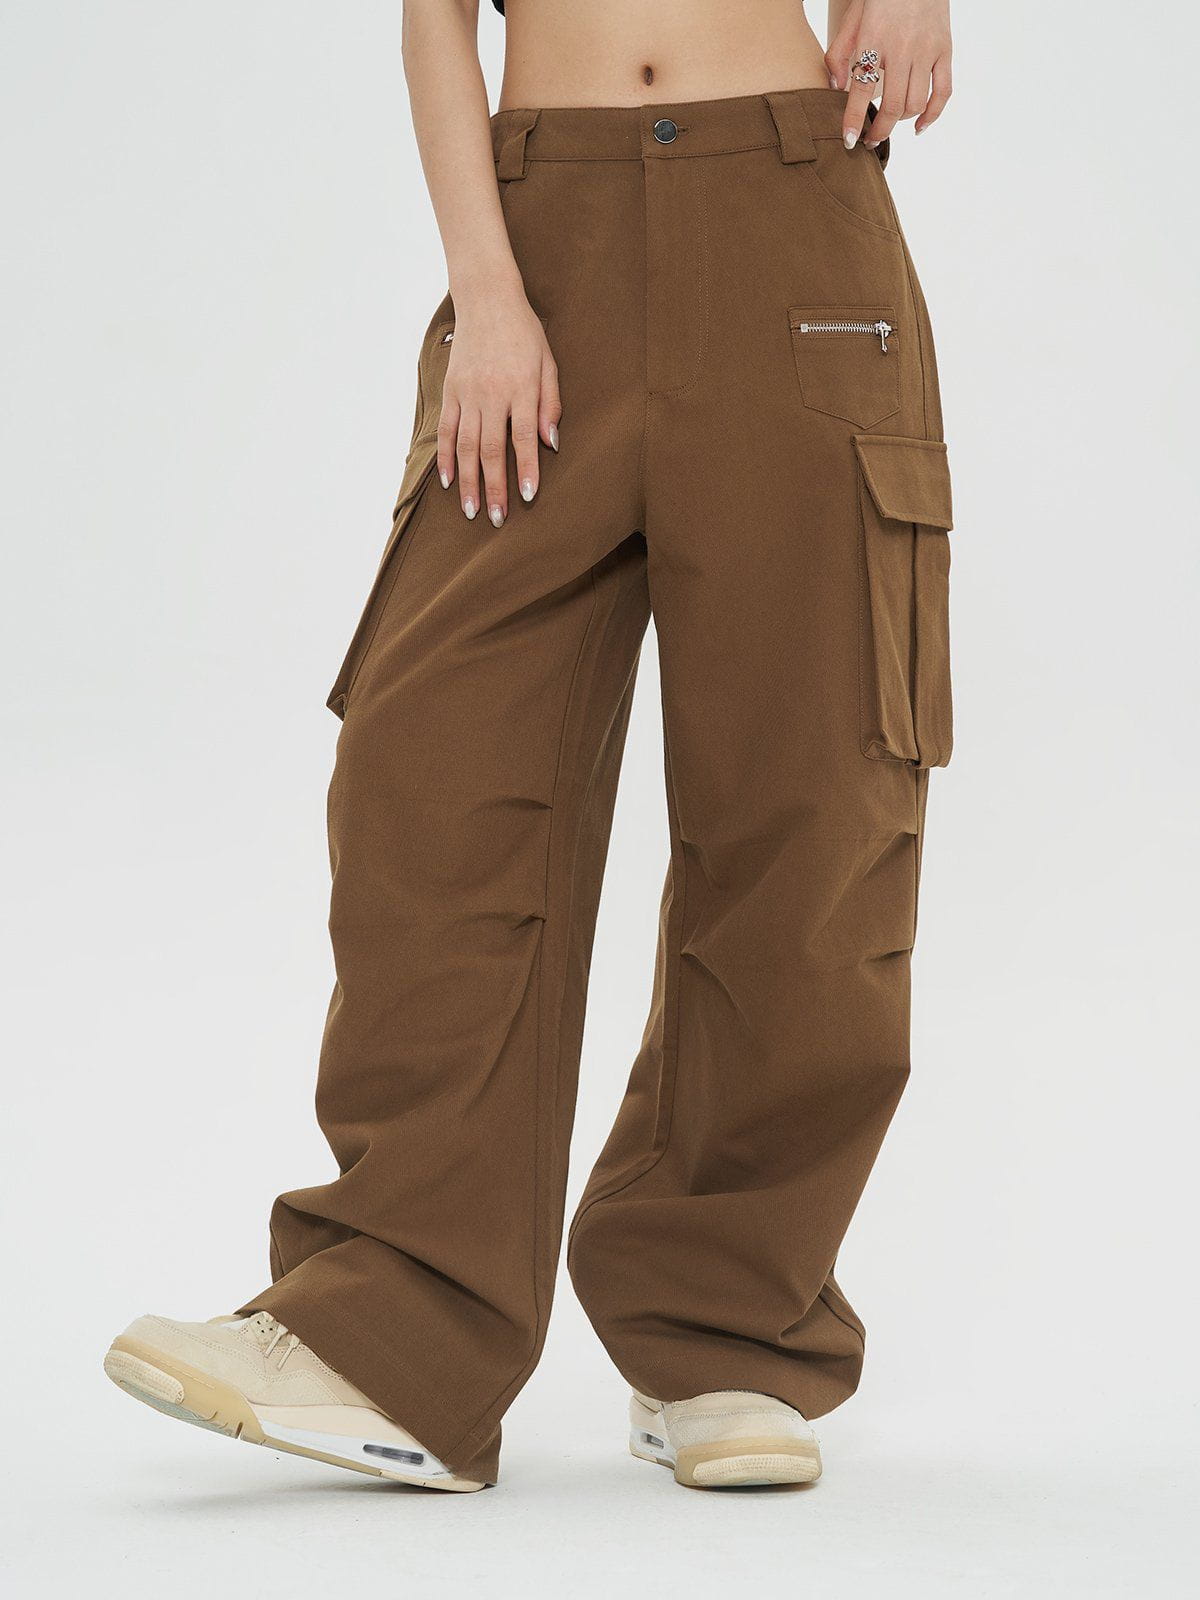 Sneakerland® - Large Pockets Cargo Pants